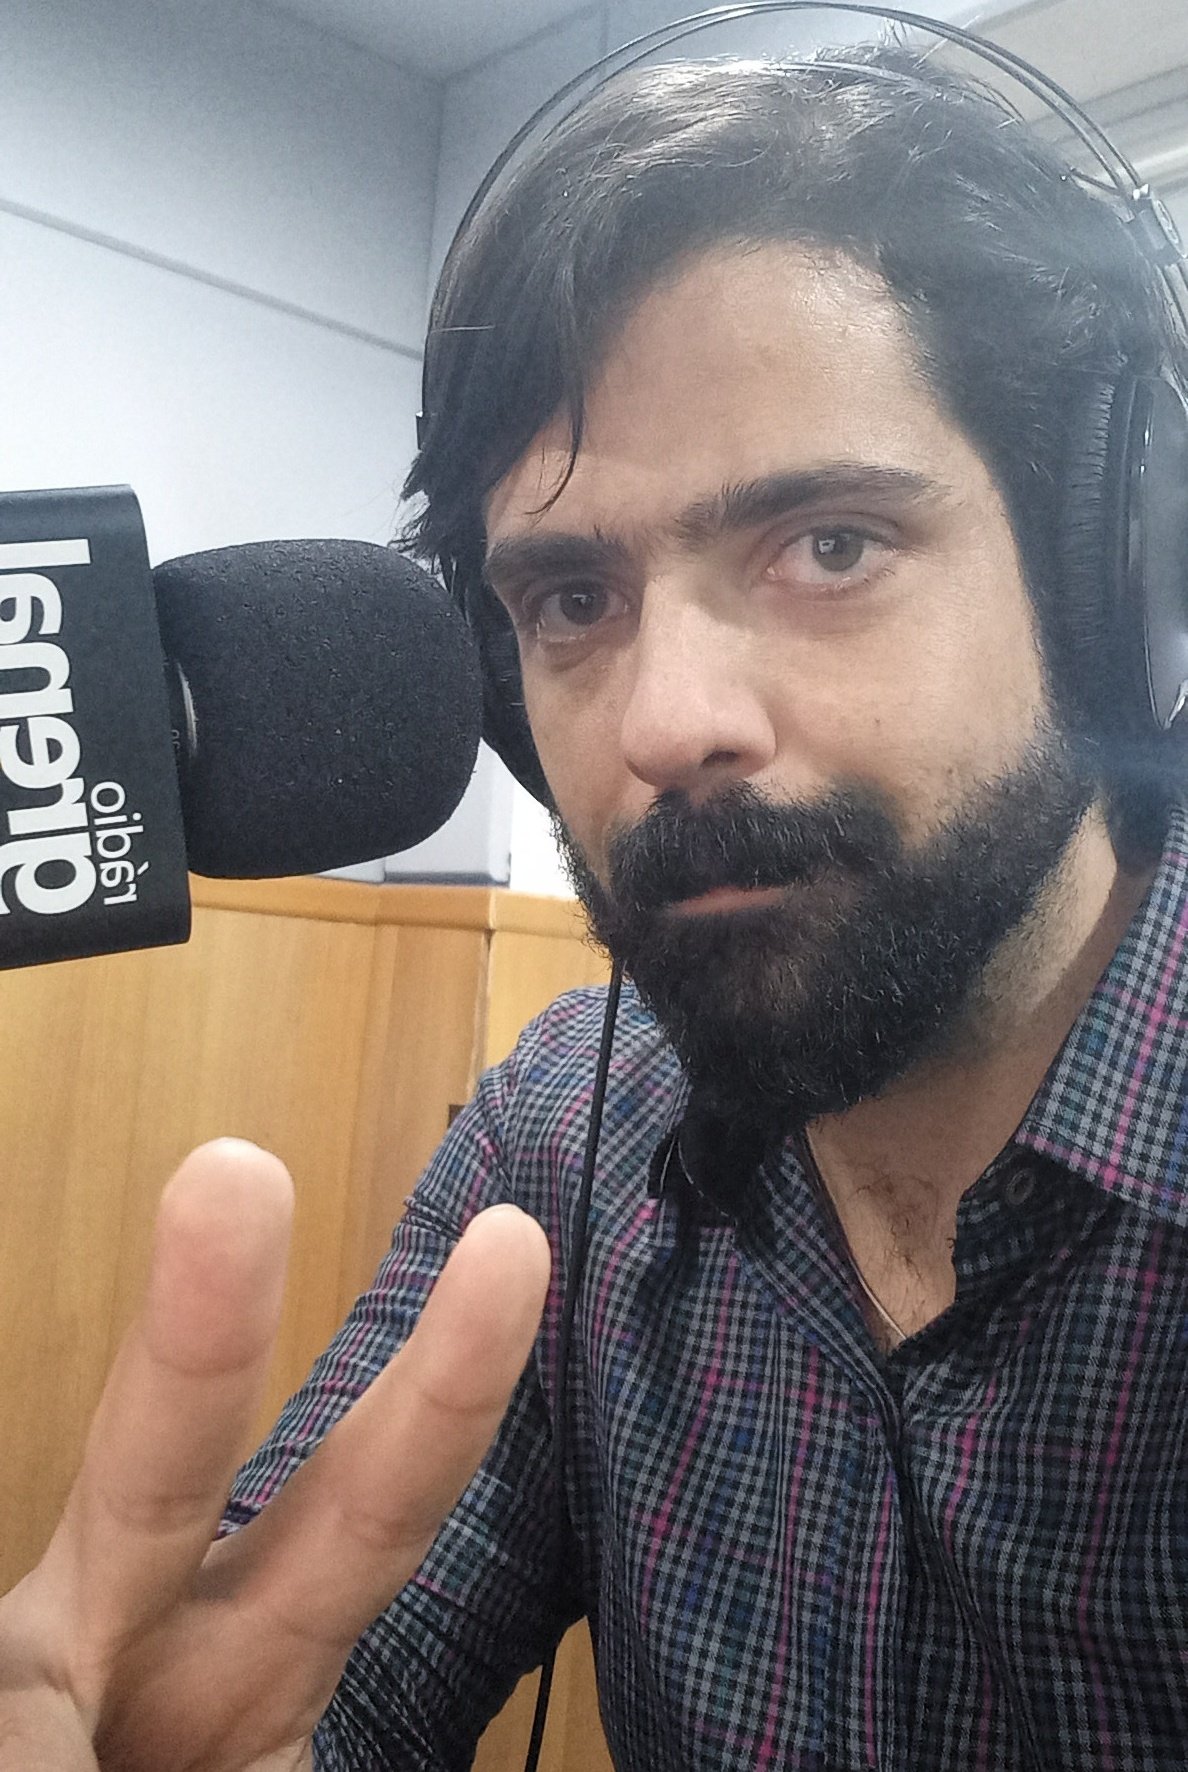 Pedro Espinosa on X: Cola na @rdgrenal no #GrenalFC agora!!! Estamos no  AR!!! EU, @Reporterfabris e @reporterlacerda !!!  /  X